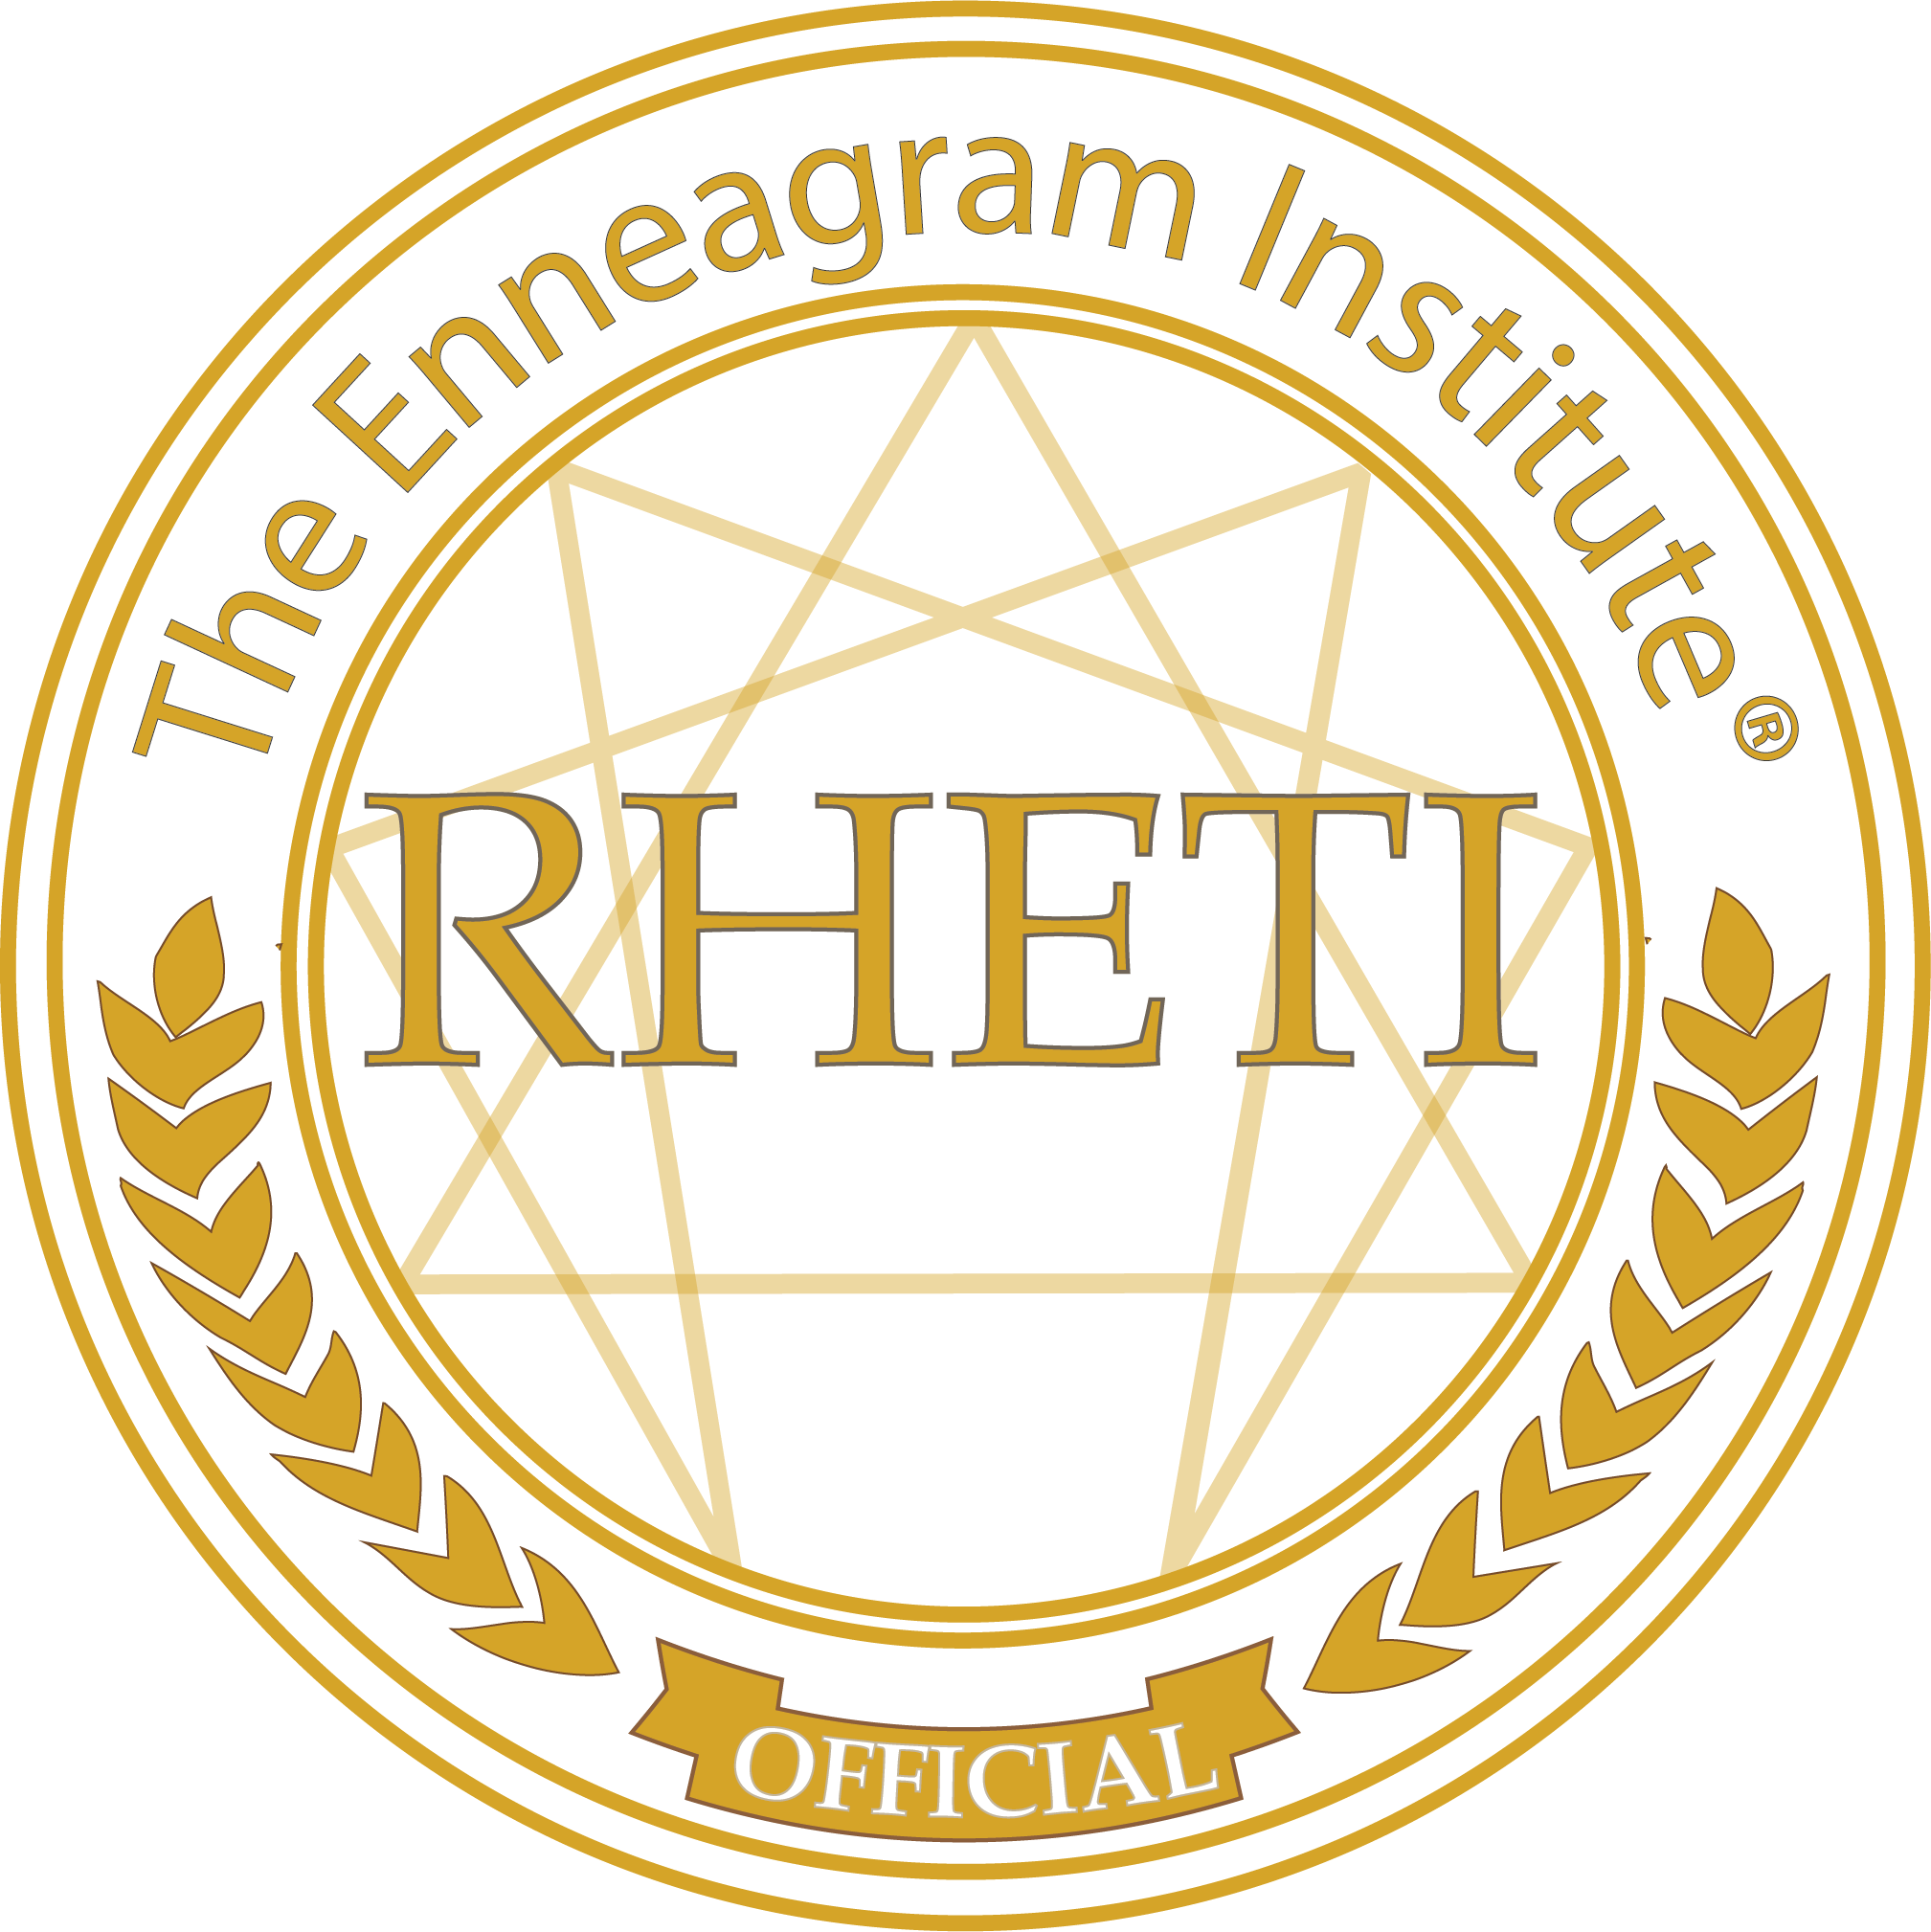 RHETI logo